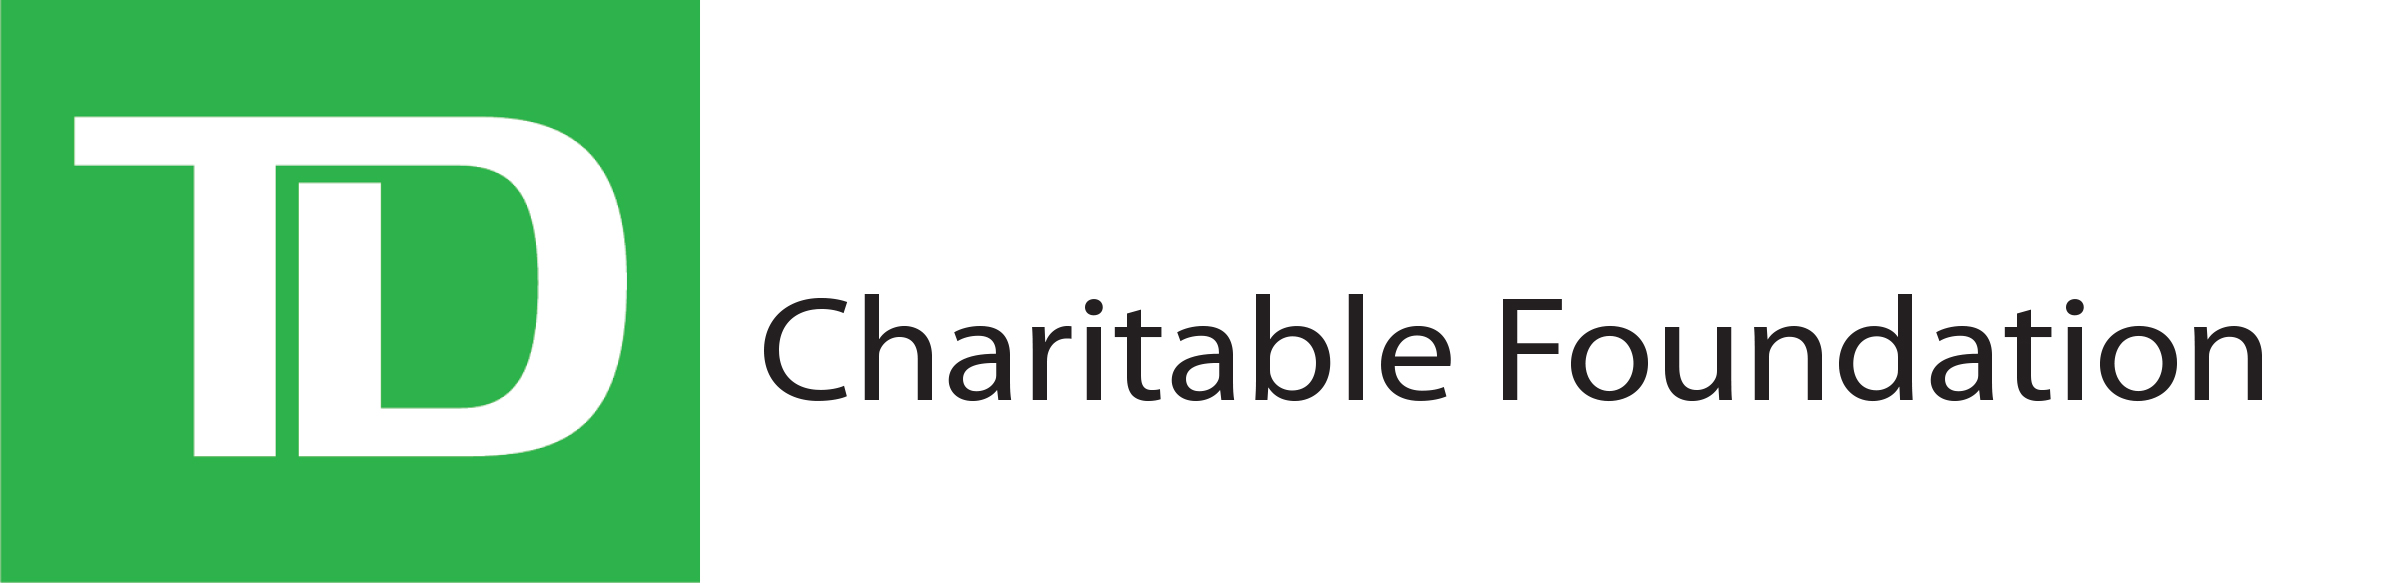 TD_CharitableFoundation-logo-resized3-1.jpg